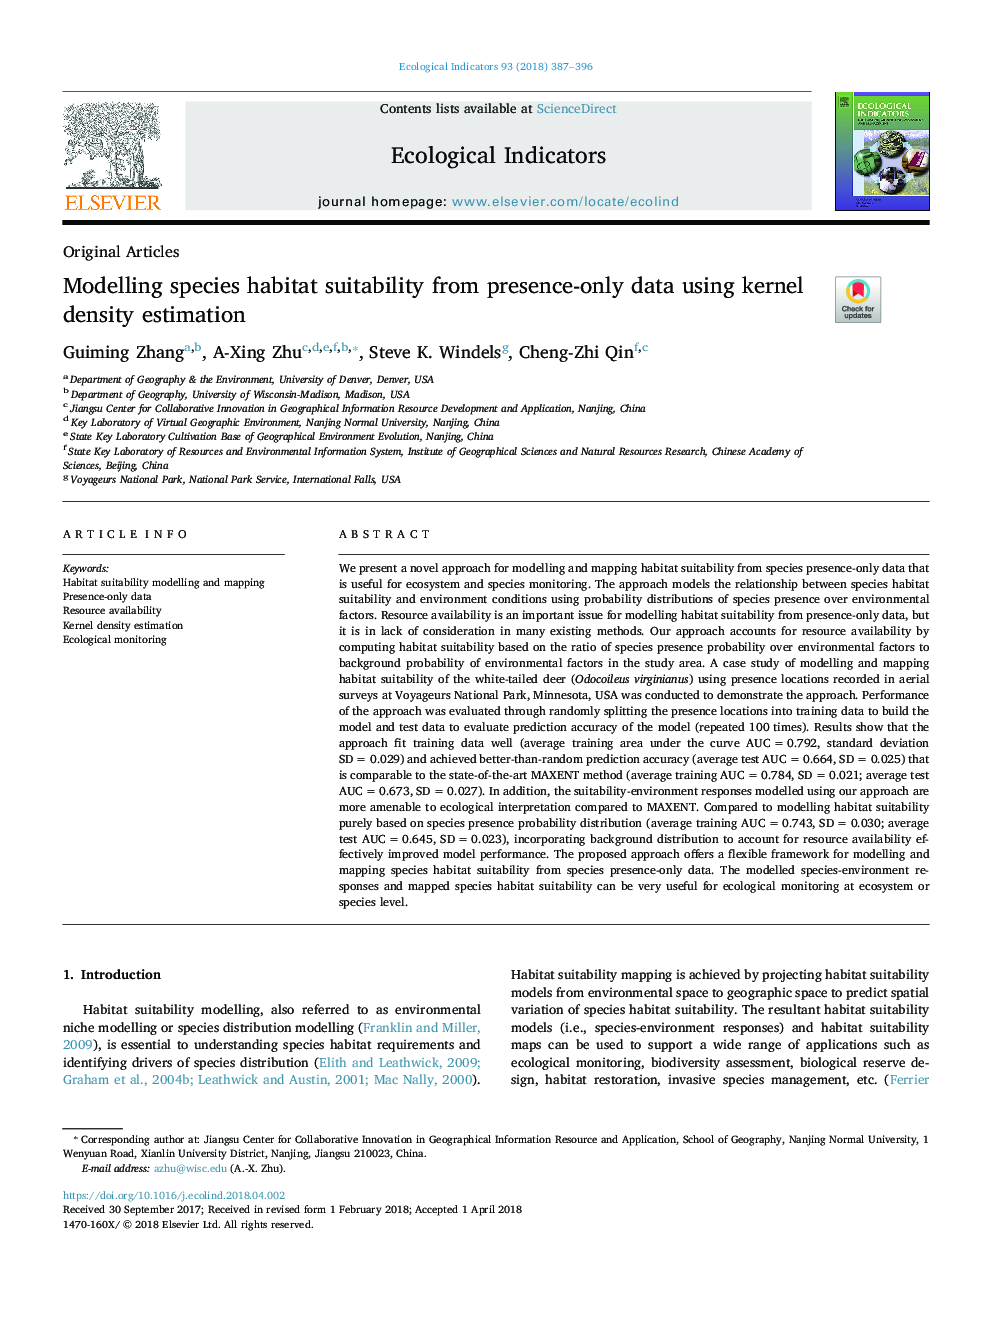 Modelling species habitat suitability from presence-only data using kernel density estimation